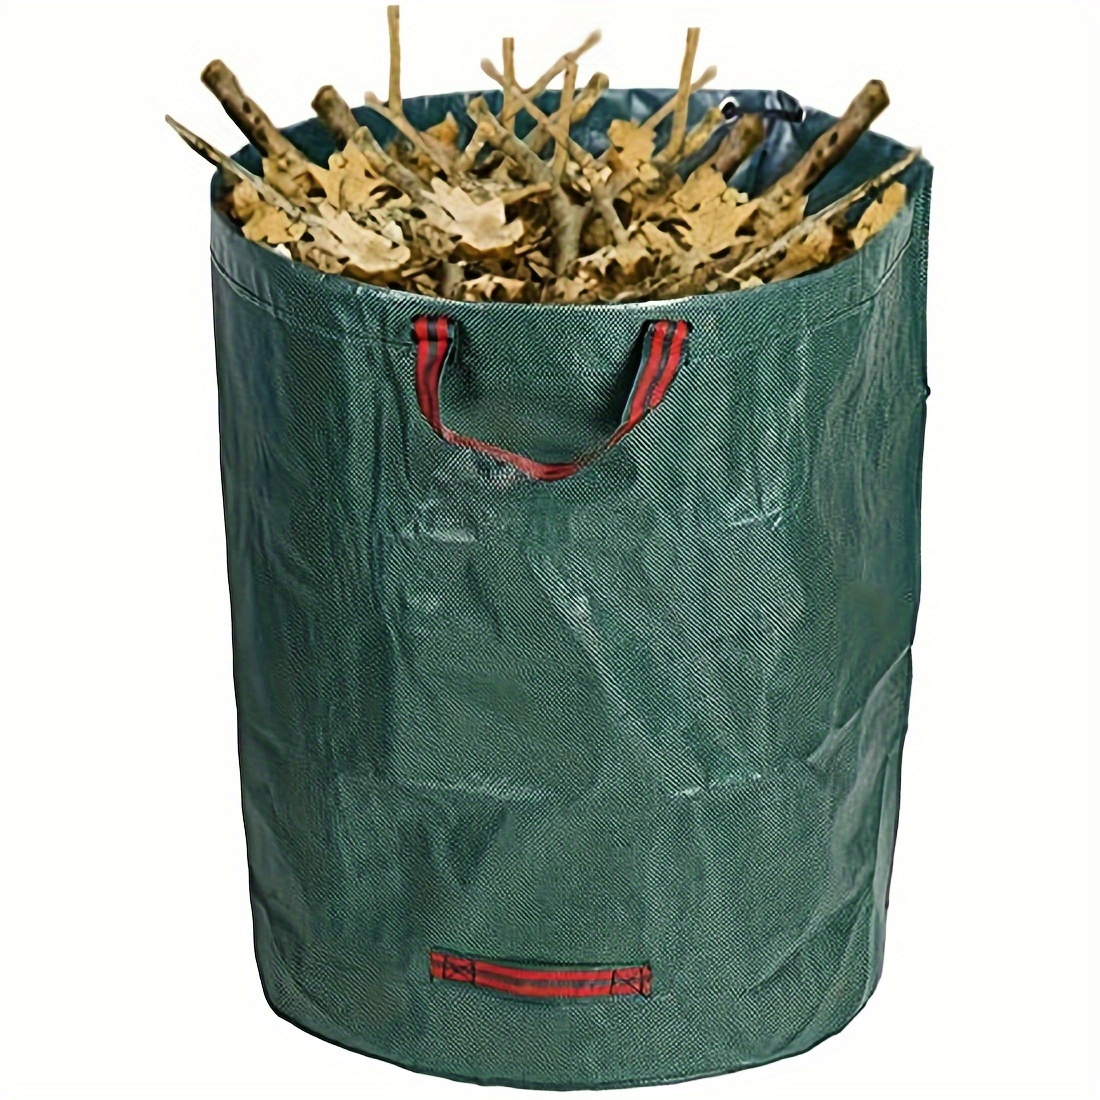 

1pc Garden Waste Bag, Reusable 4 Handles Heavy-duty Garden Leaf Rubbish Bag, Durable Material Yard Waste Container